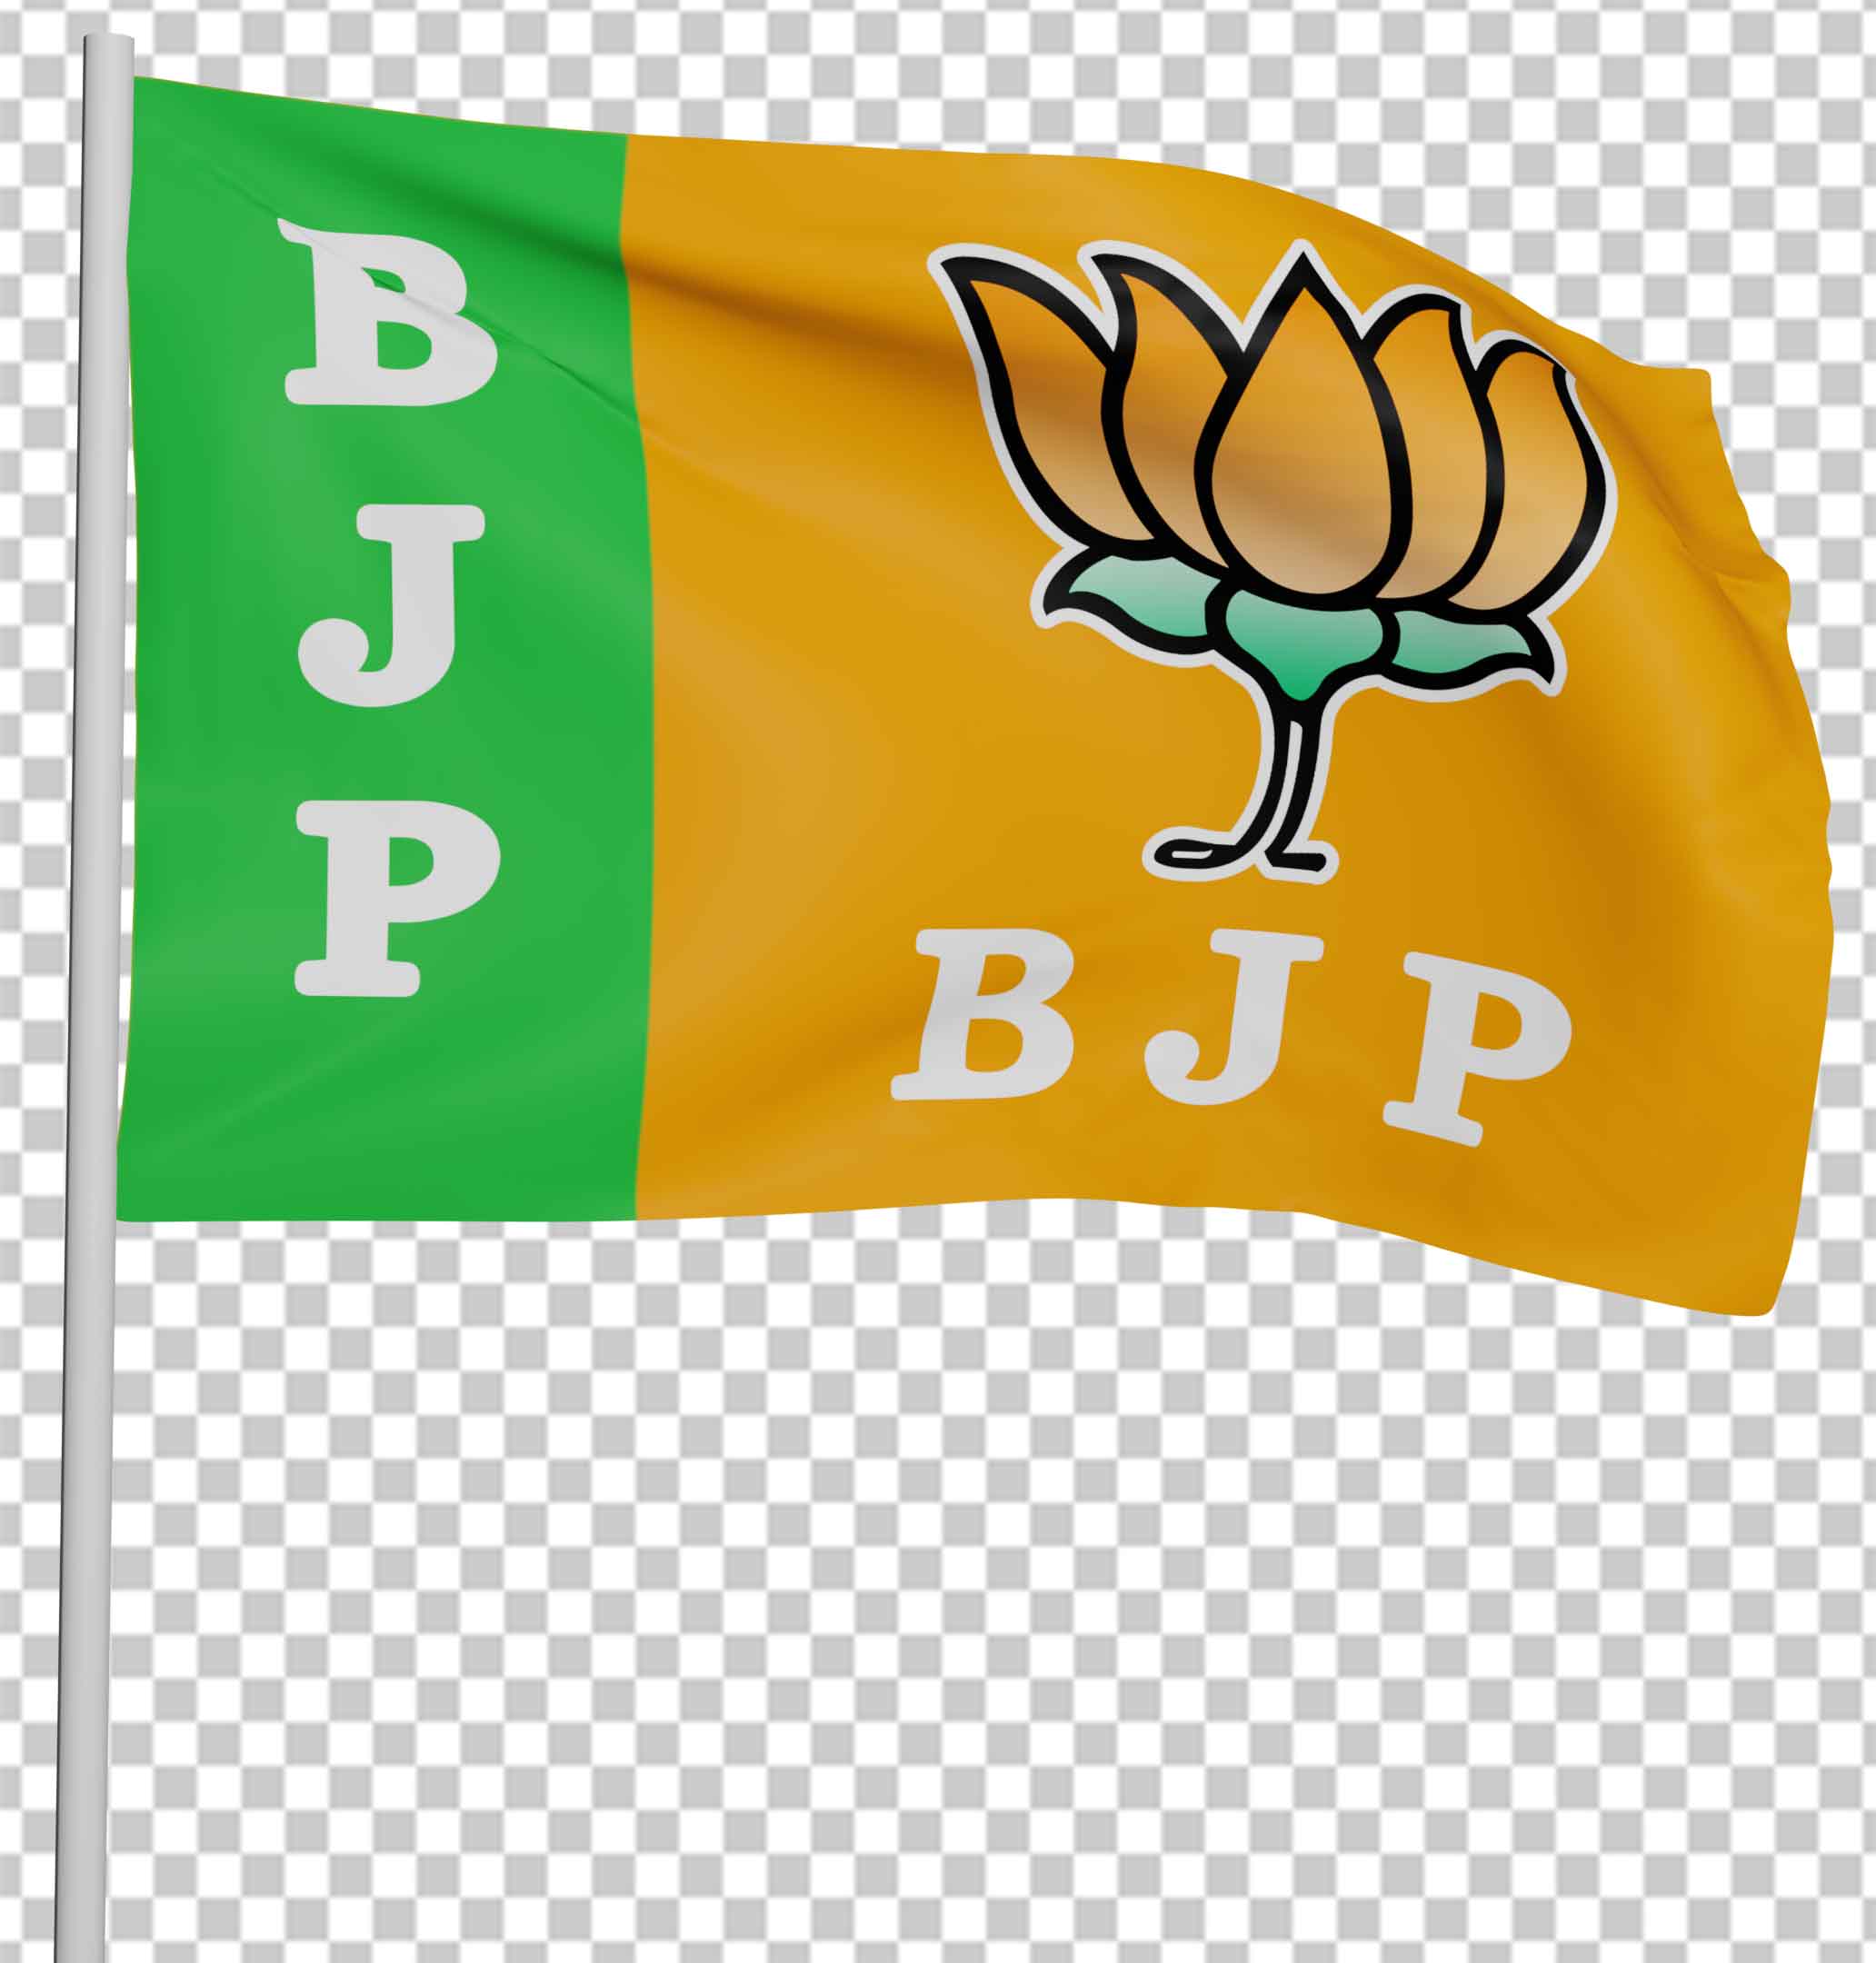 Bjp Logo, Bjp Logo Png, Bjp Logo Vector, Bjp Png, Indian - Independence Day  National Flag, Transparent Png , Transparent Png Image | PNG.ToolXoX.com